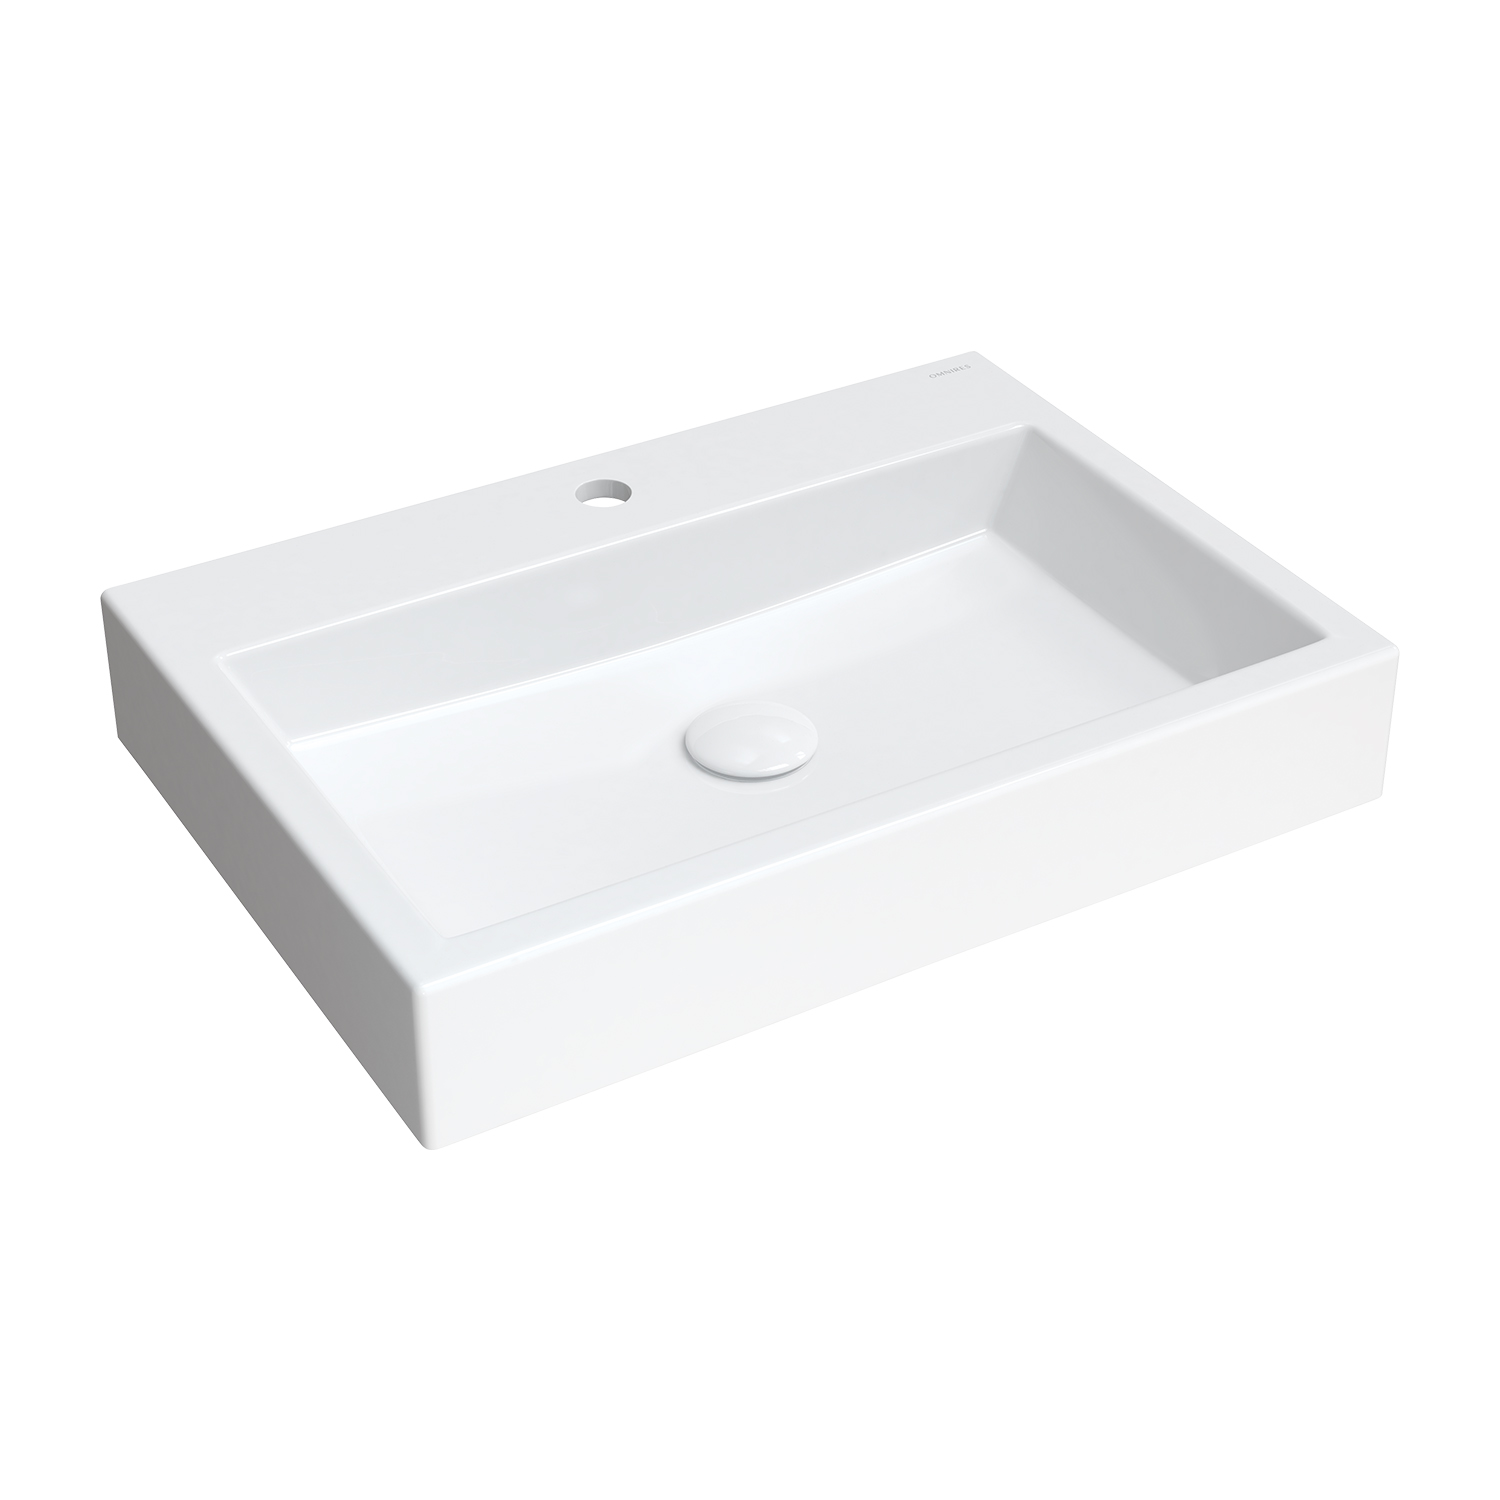 countertop/wall-mounted basin, 60 x 42 cm